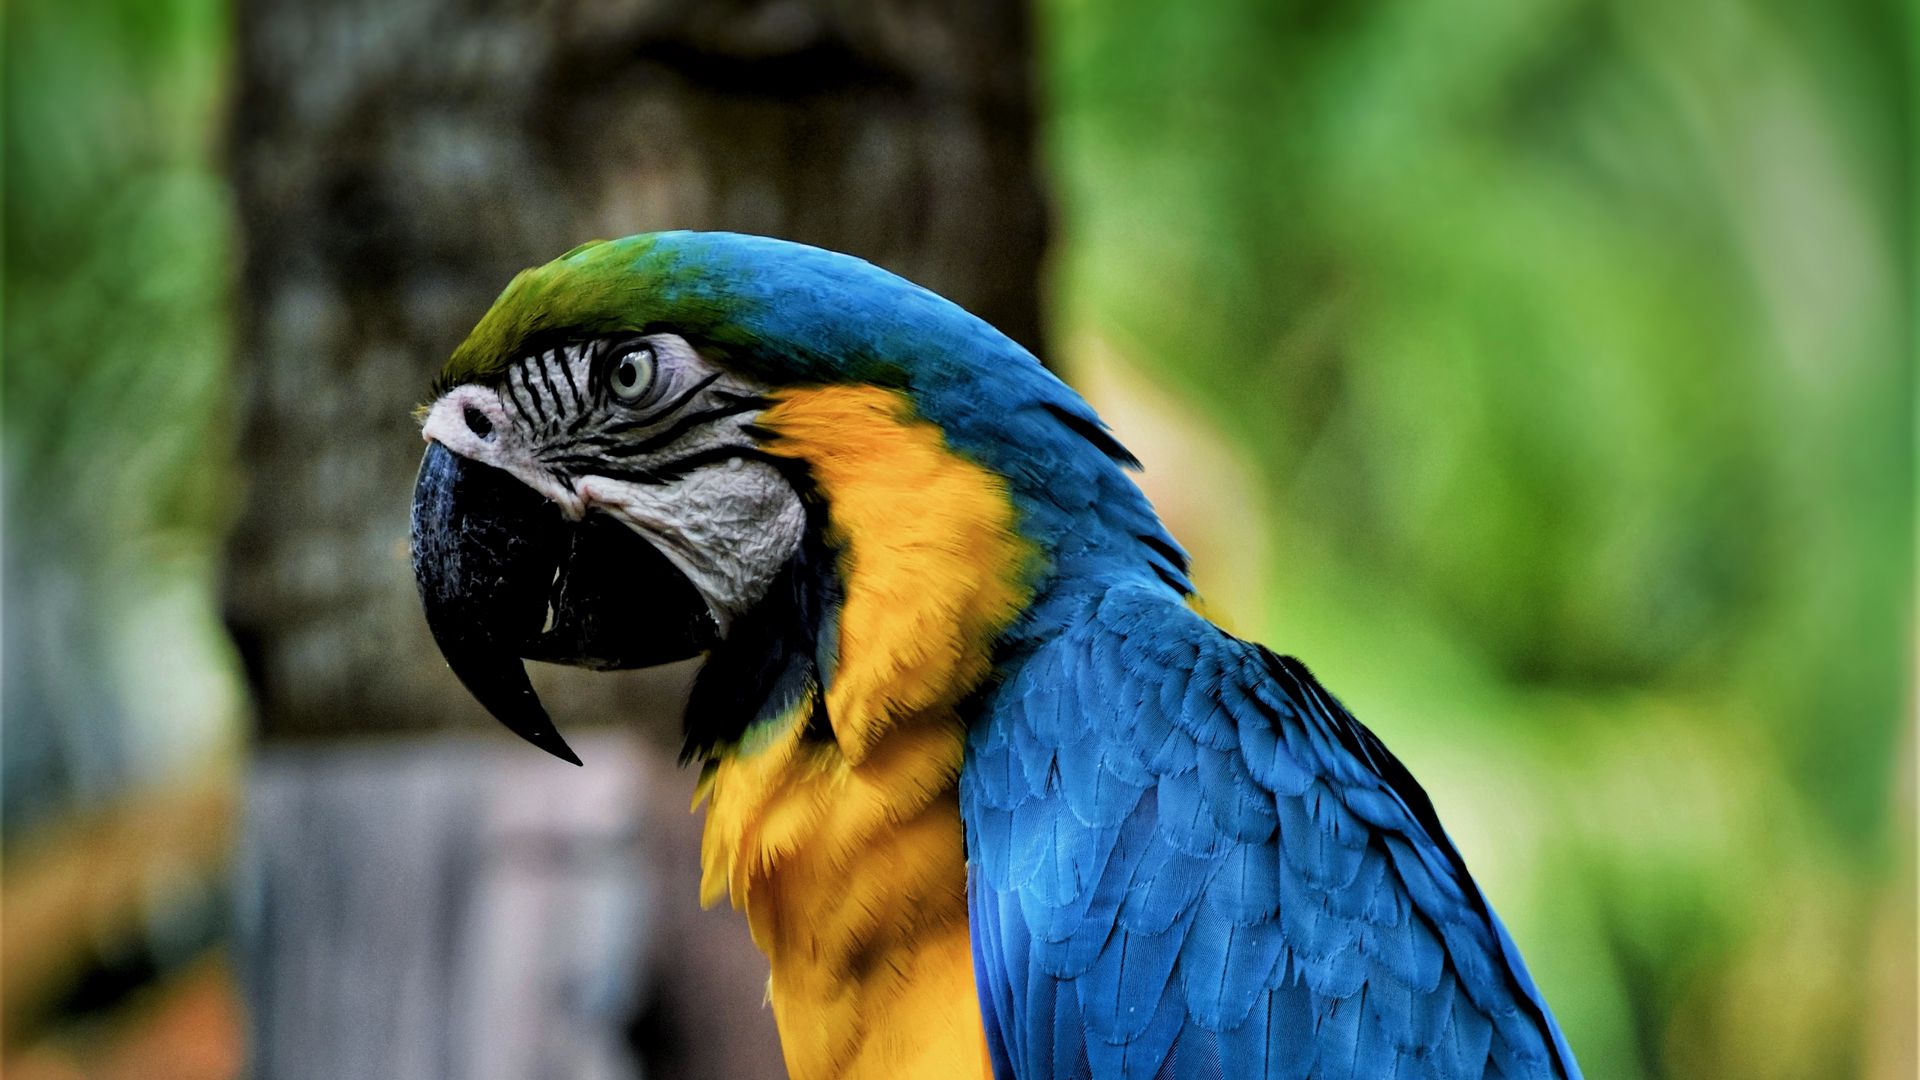 Download Wallpaper 1920x1080 Macaw Parrot Bird Color Beak Full Hd